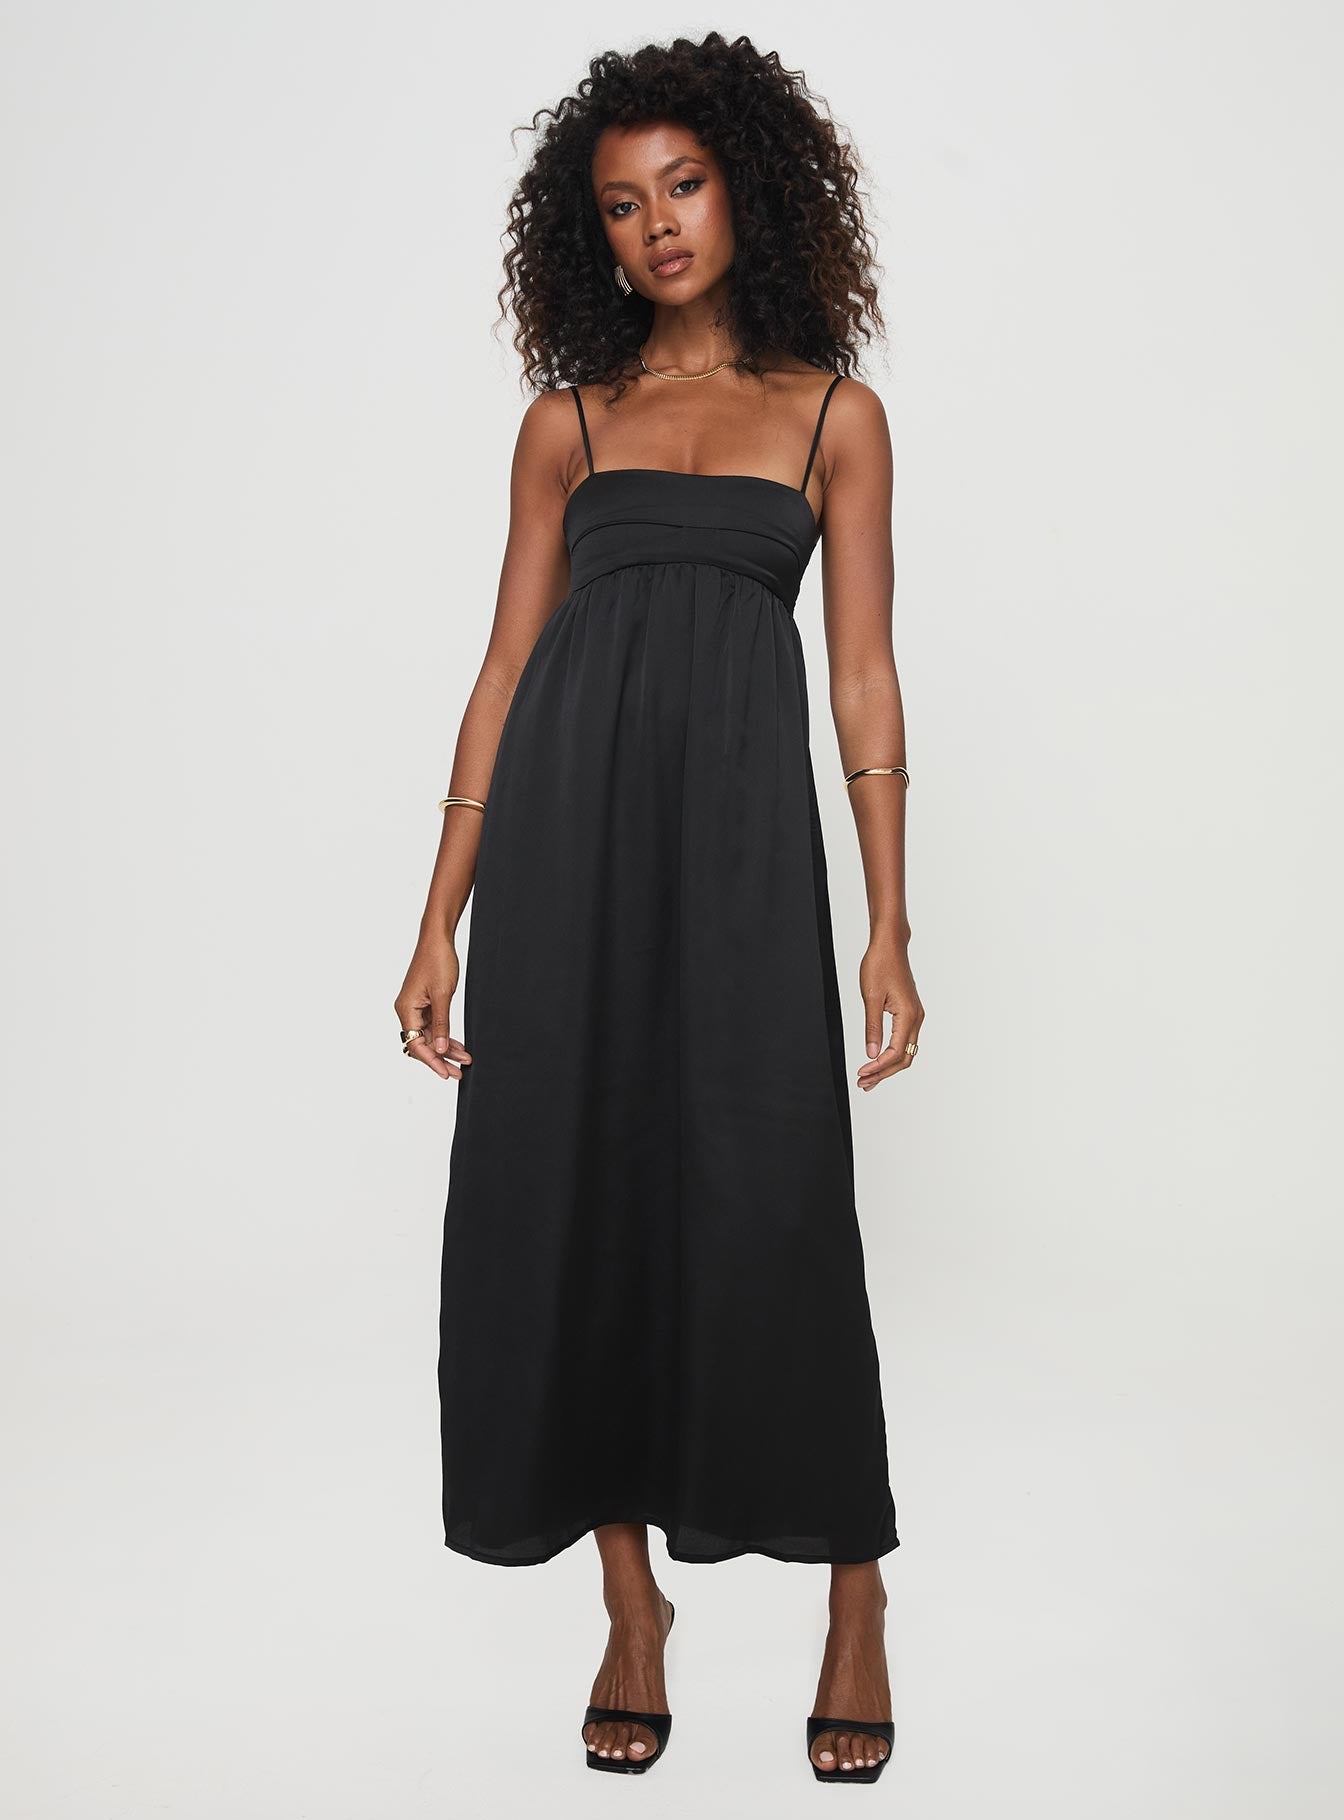 Shop Formal Dress - Ortega Maxi Dress Black sixth image